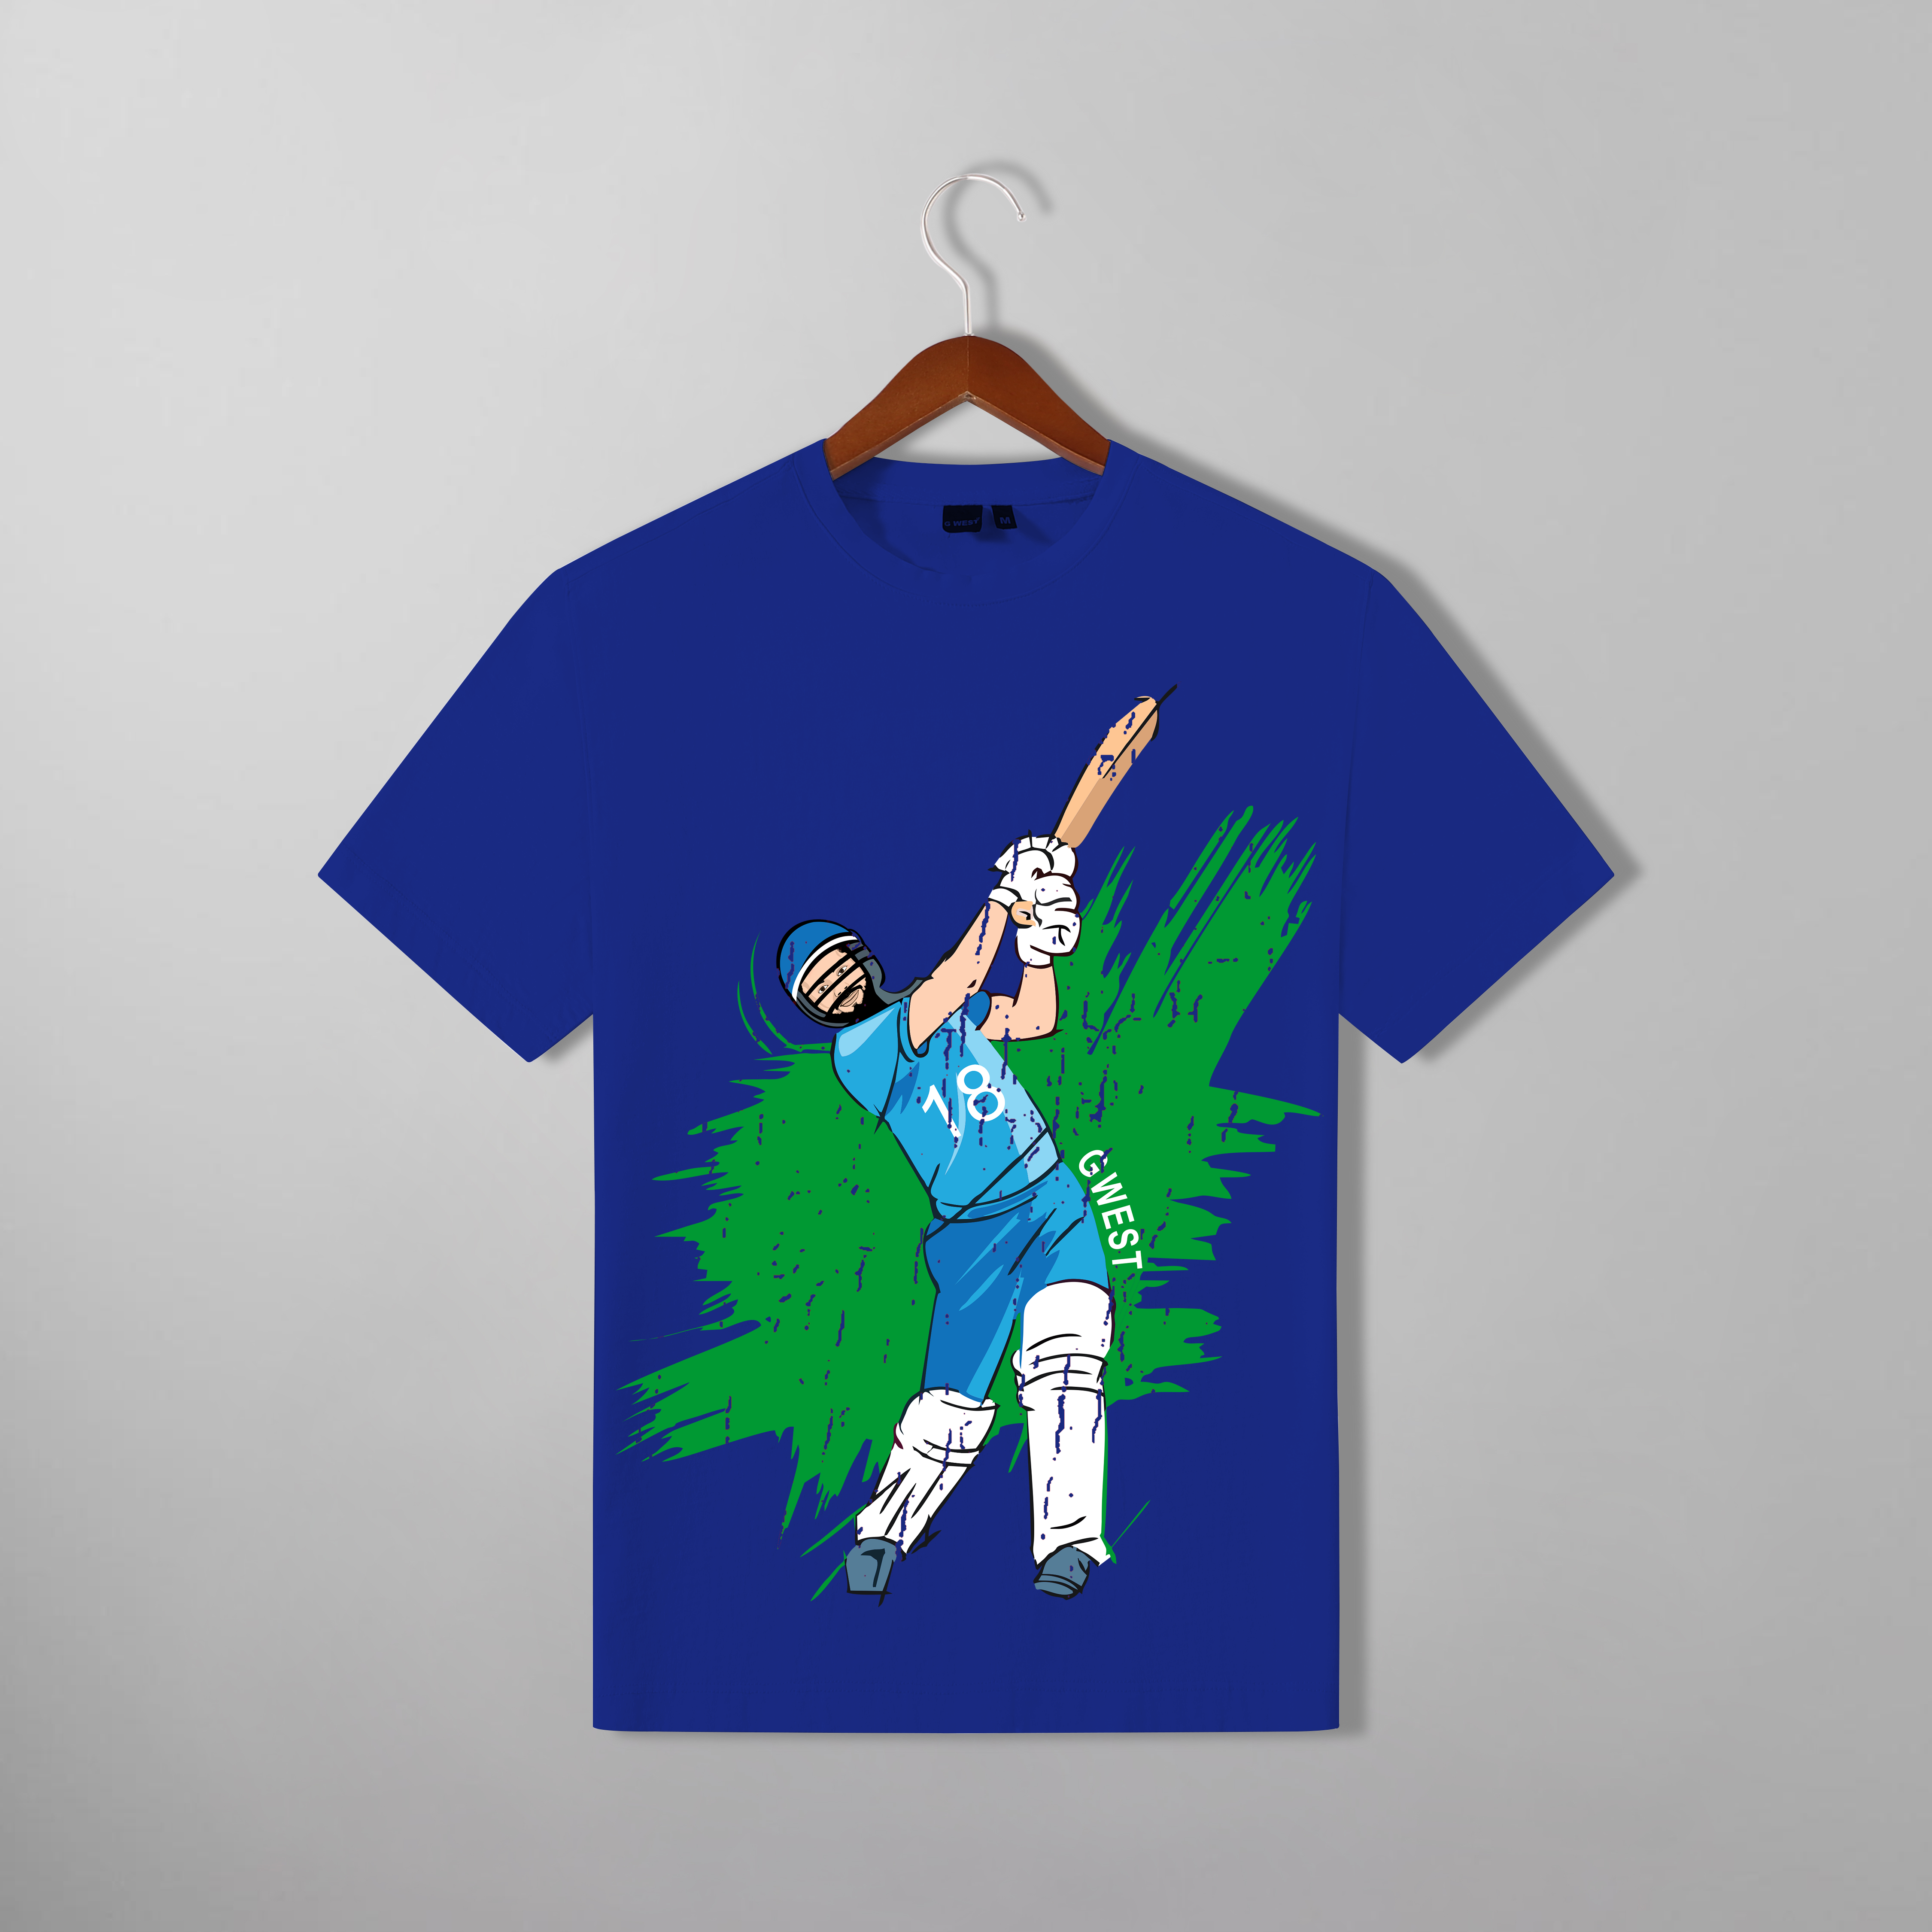 G West Cricket India T-Shirt : GWDTFL2411 - 3 COLORS